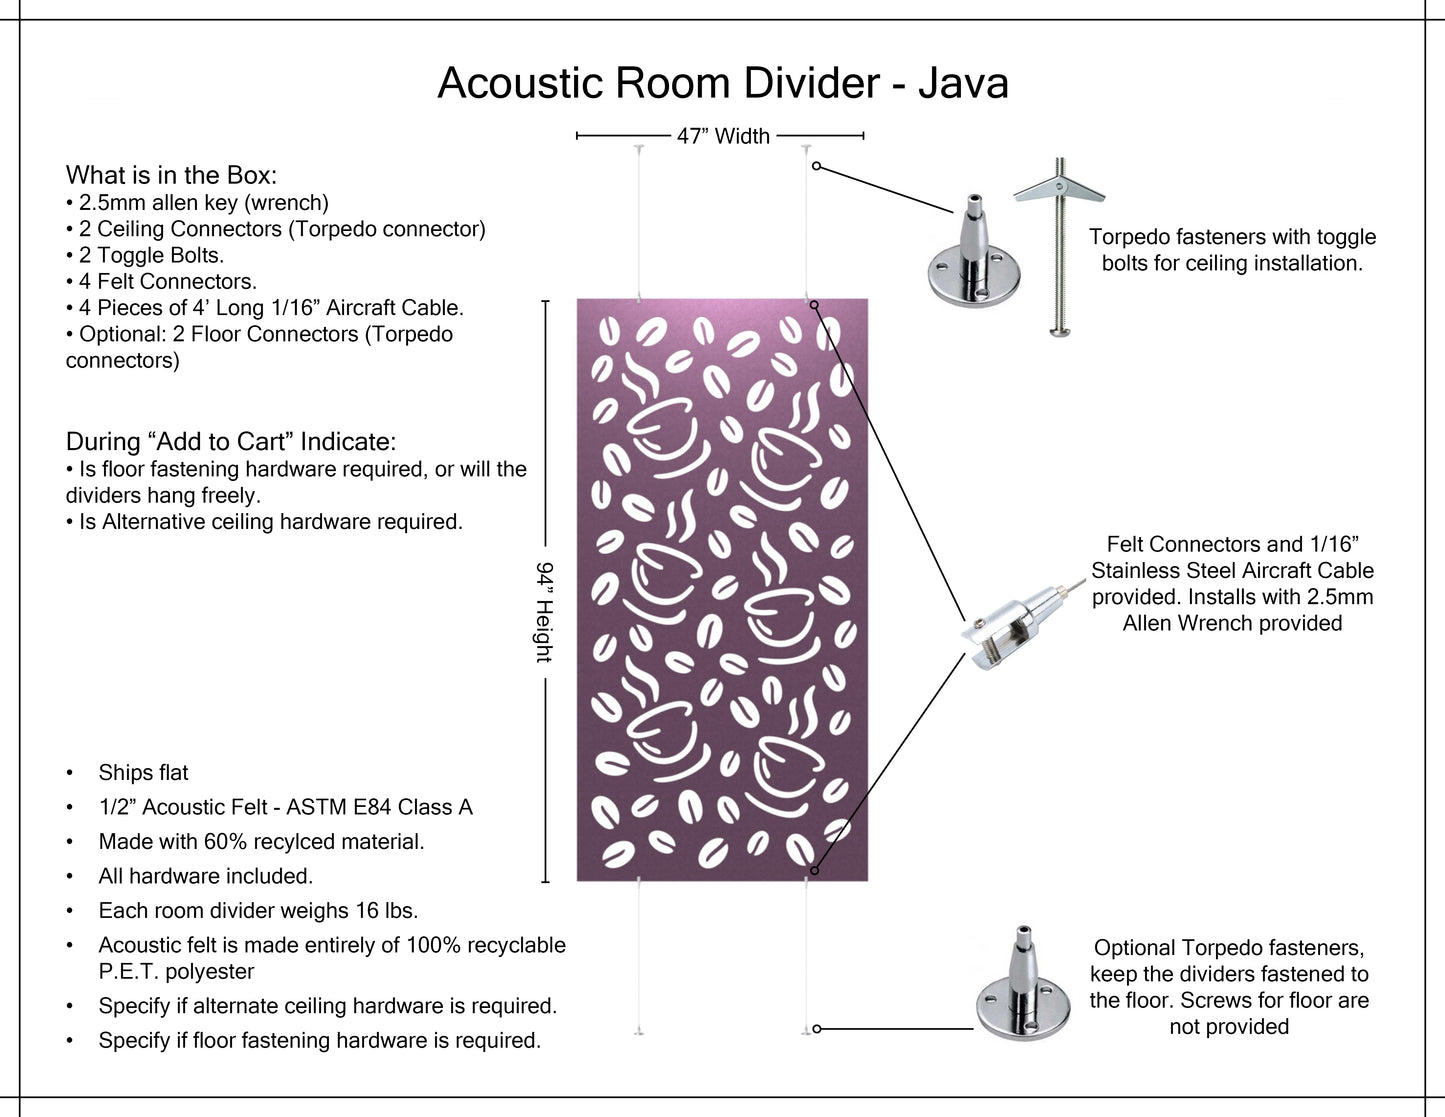 4x8 Acoustic Room Divider - Java